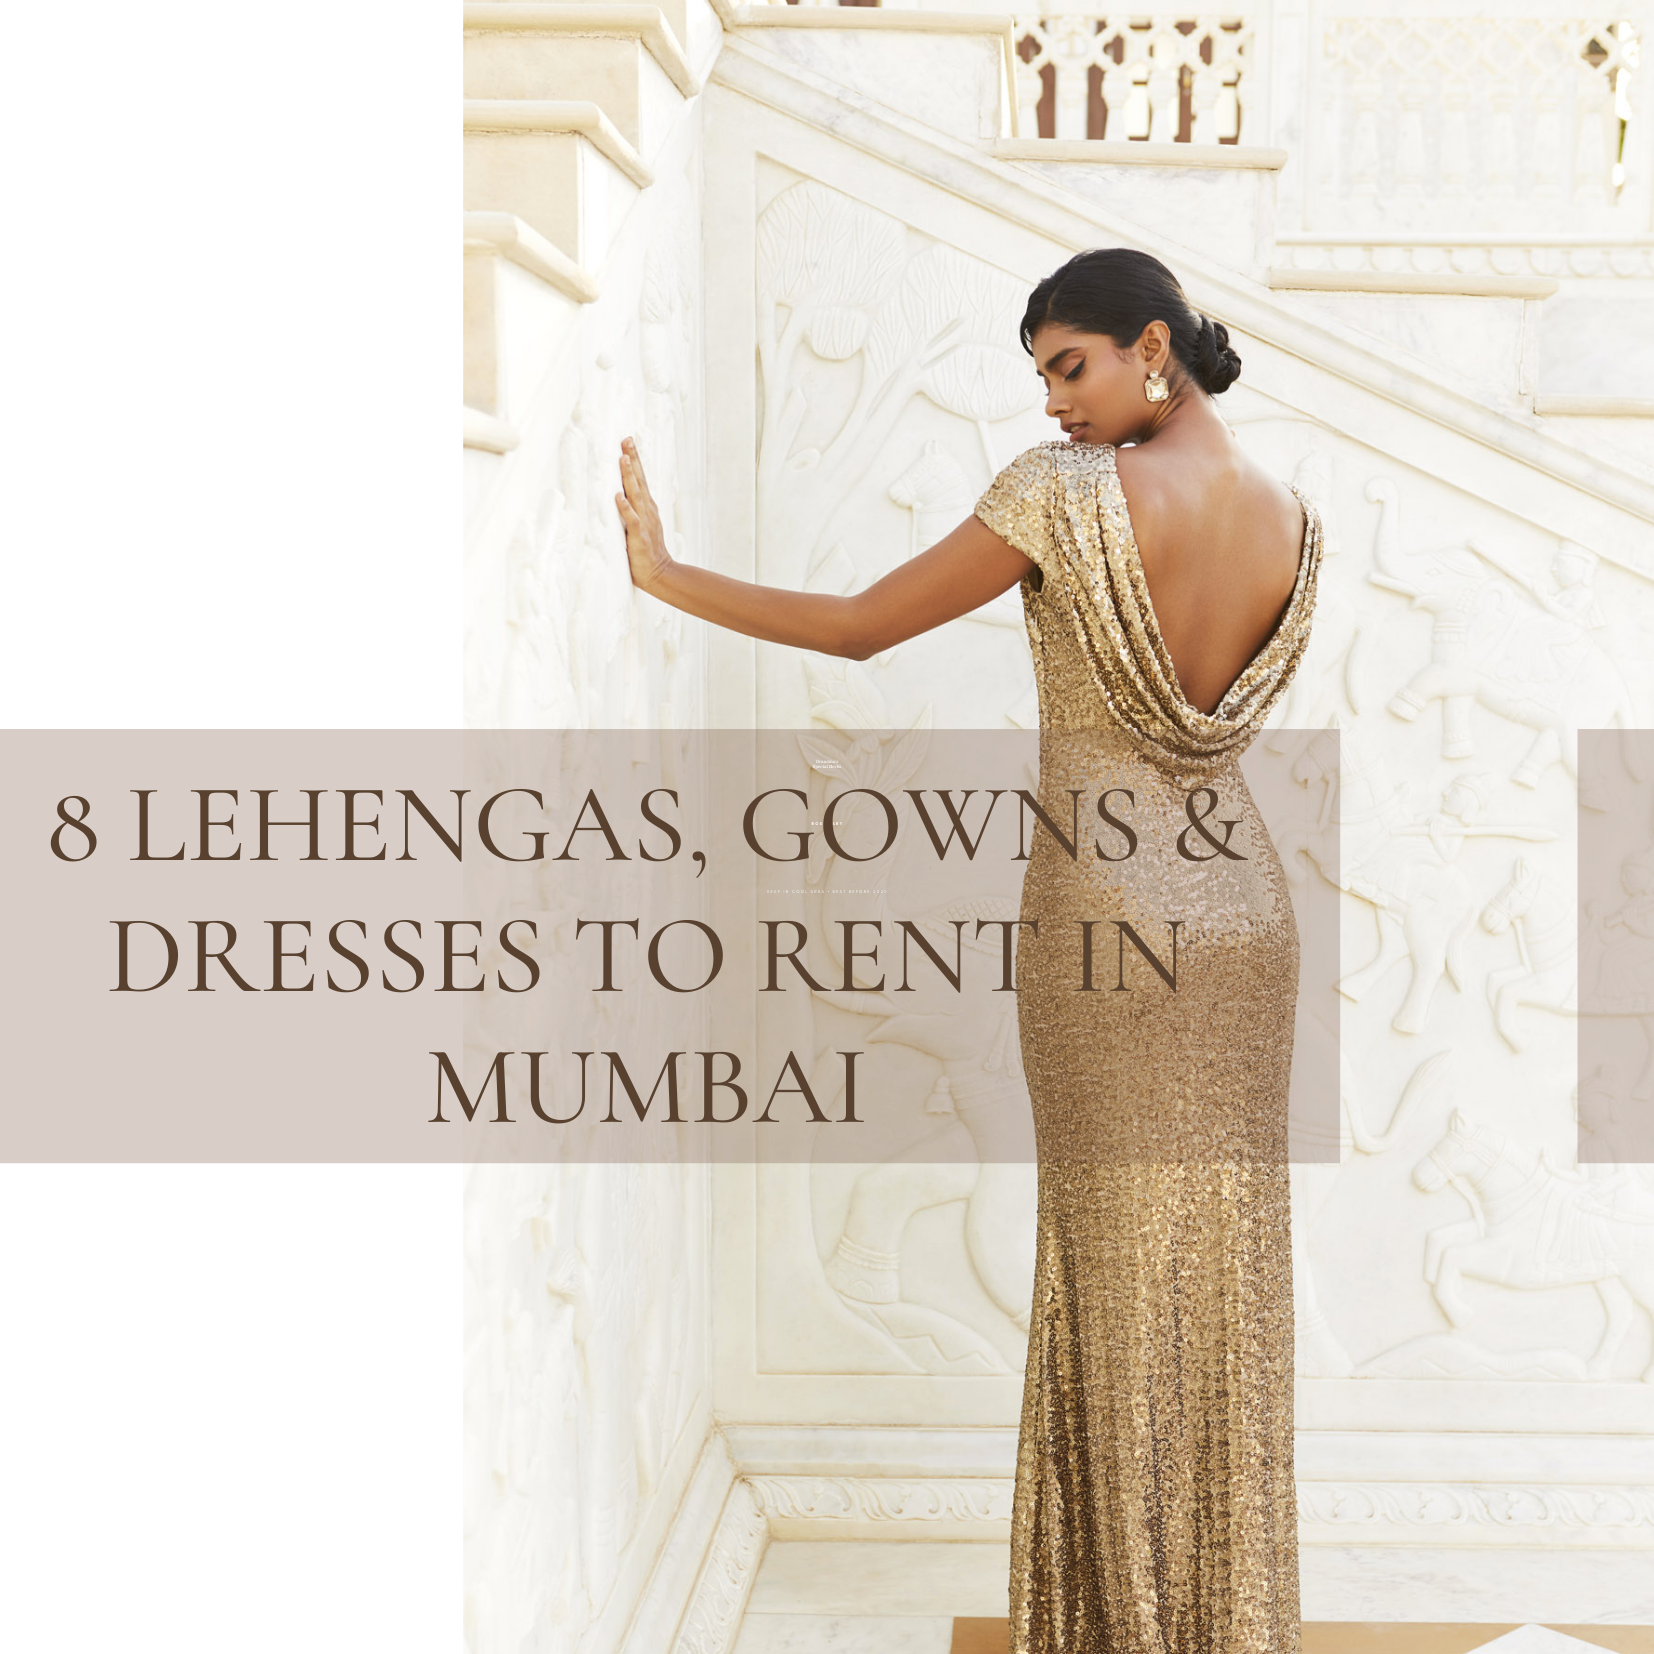 Garba Dress On Rent In Mumbai by Ashutoshkhurana on DeviantArt